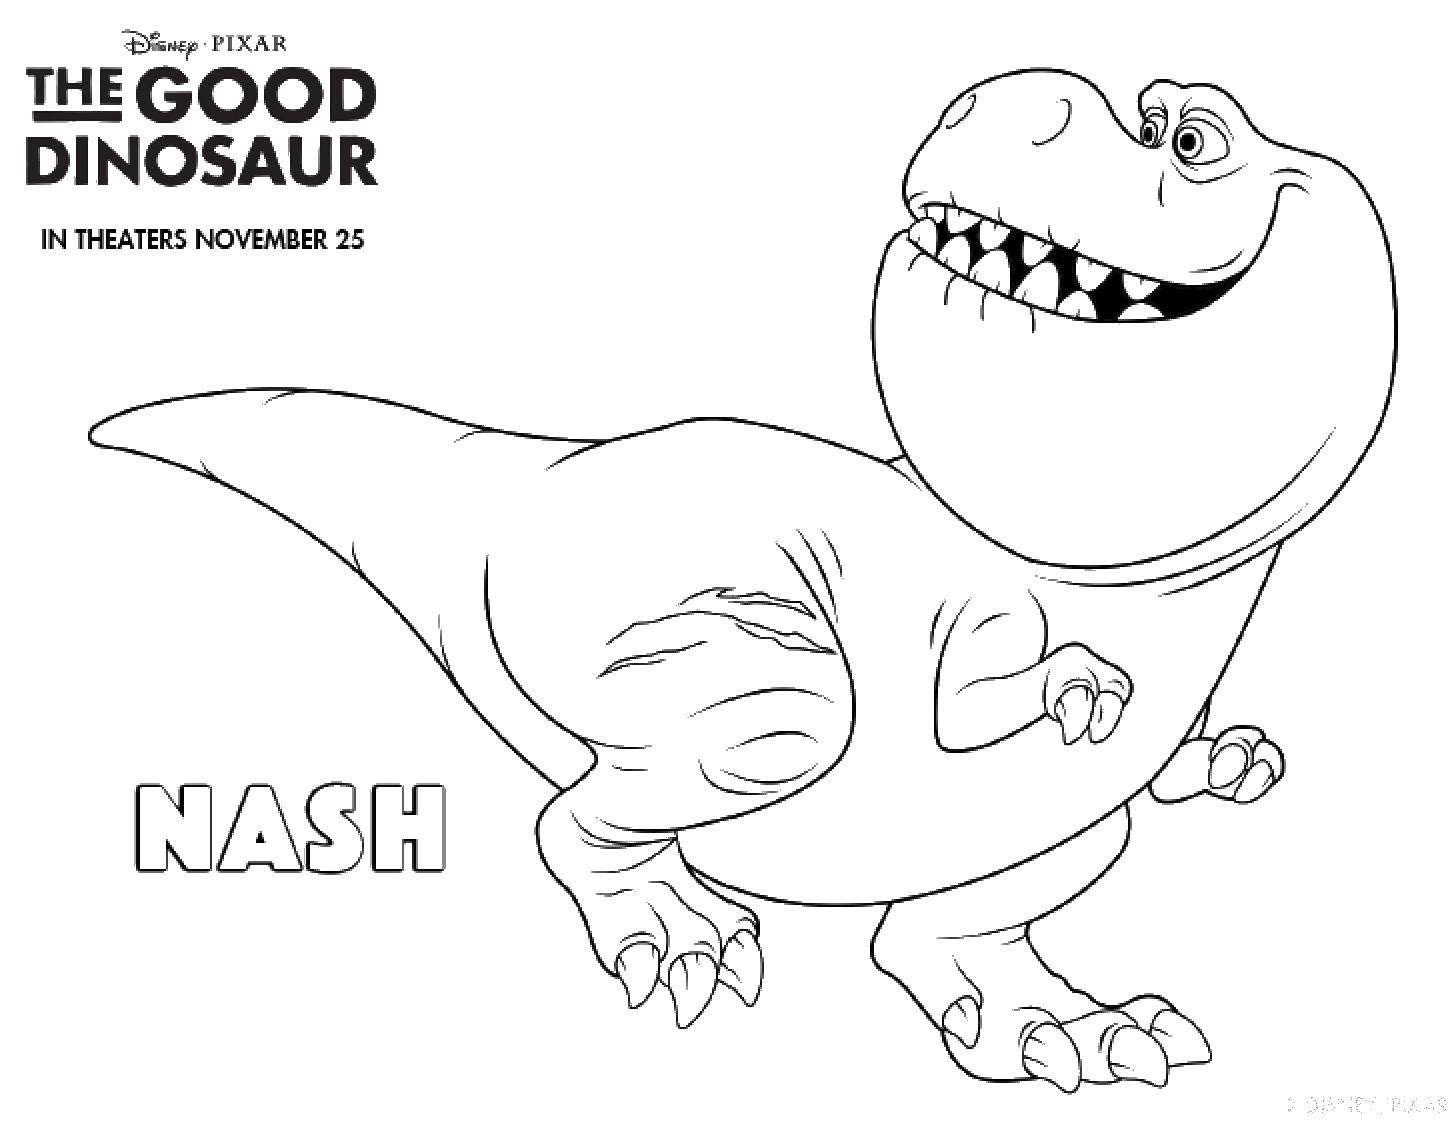 Coloring Nash from the good dinosaur cartoon. Category dinosaur. Tags:  Nash , the good dinosaur.